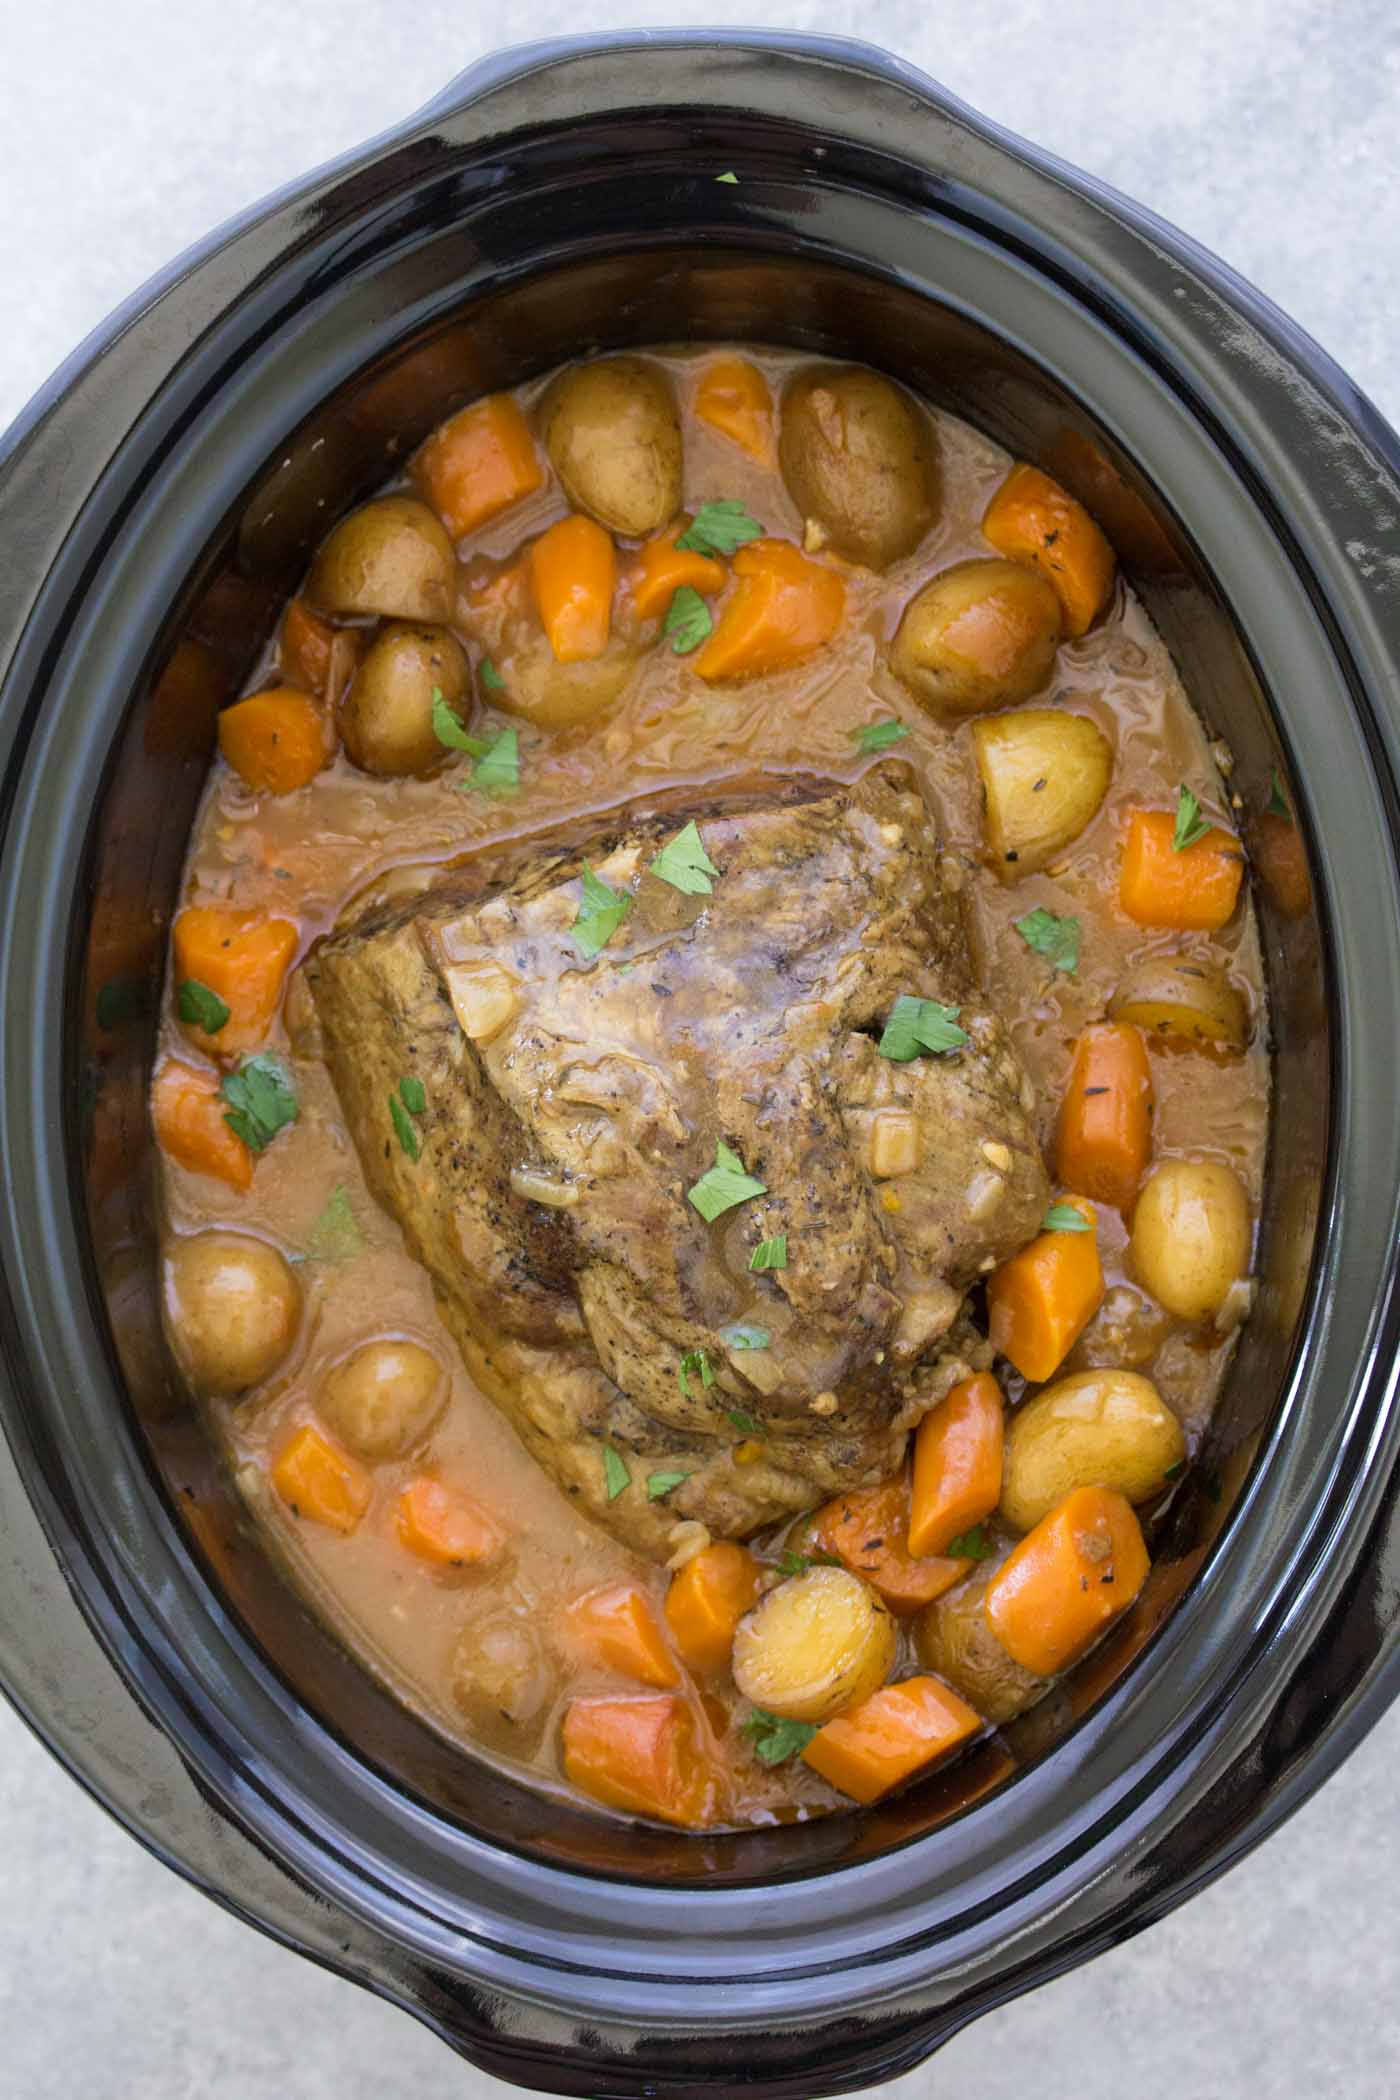 Pot roast in crock pot.